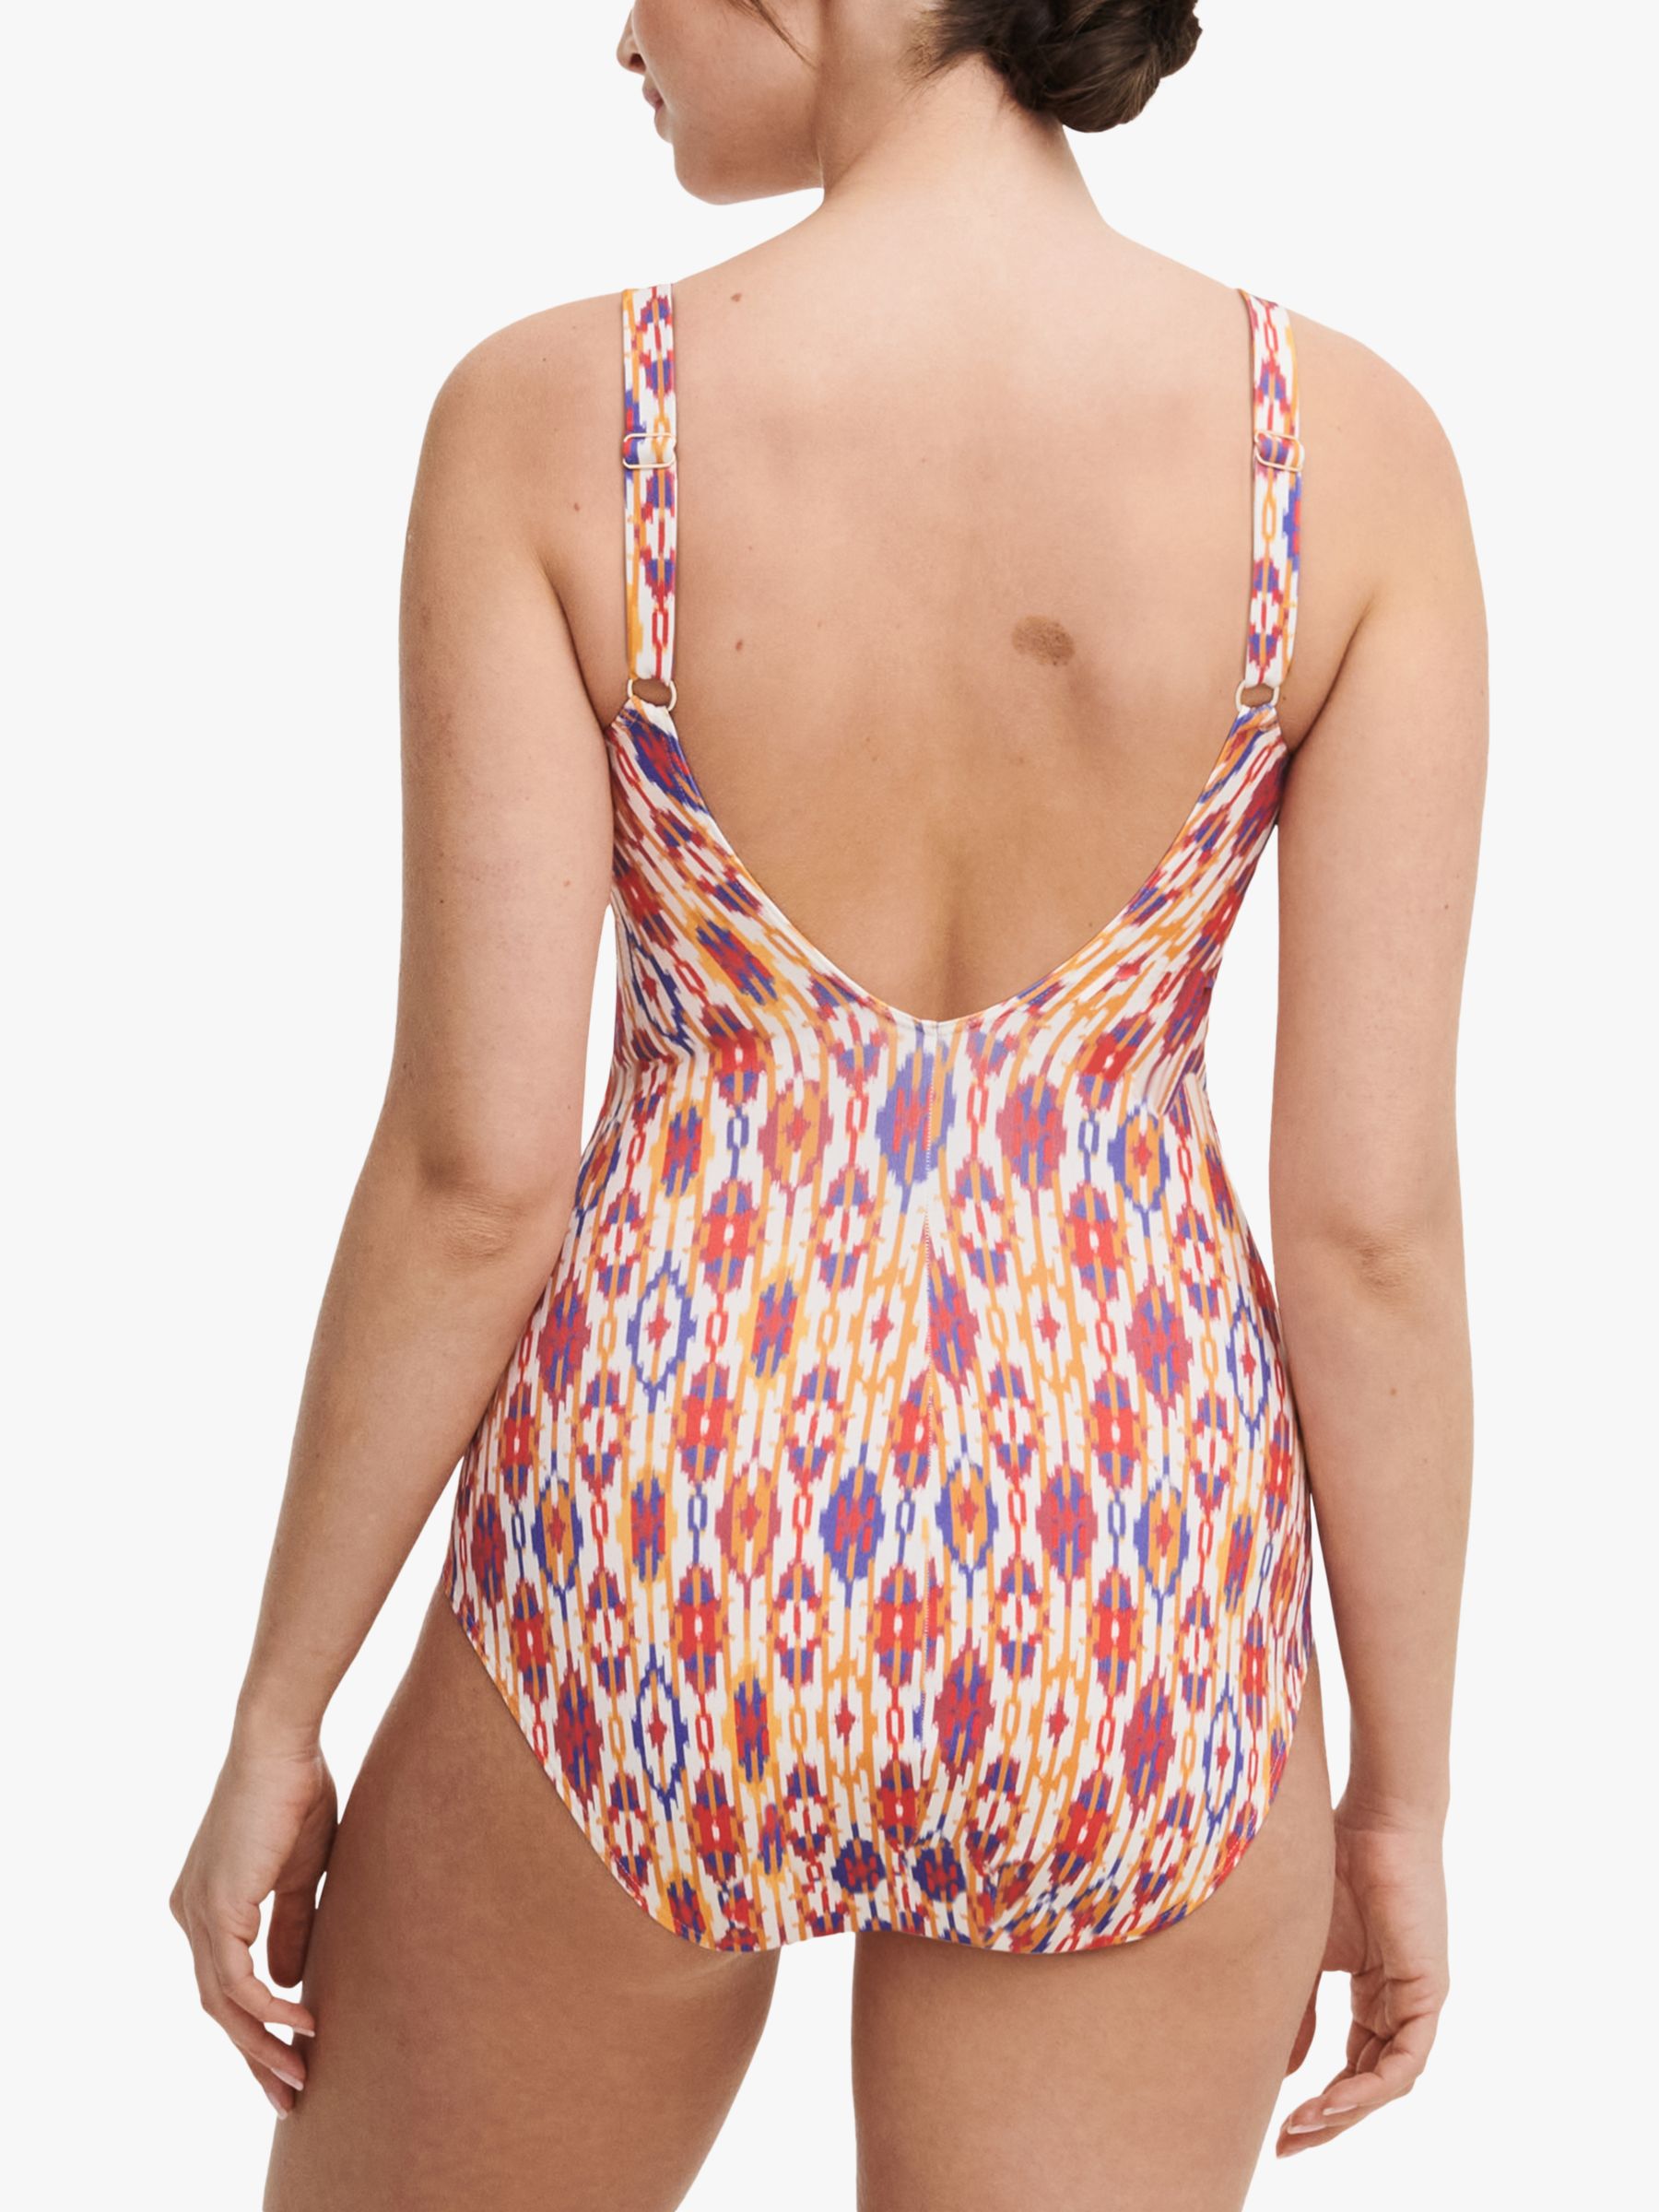 Chantelle Devotion Ikat Print Underwired Swimsuit, Red/Multi, 38DD